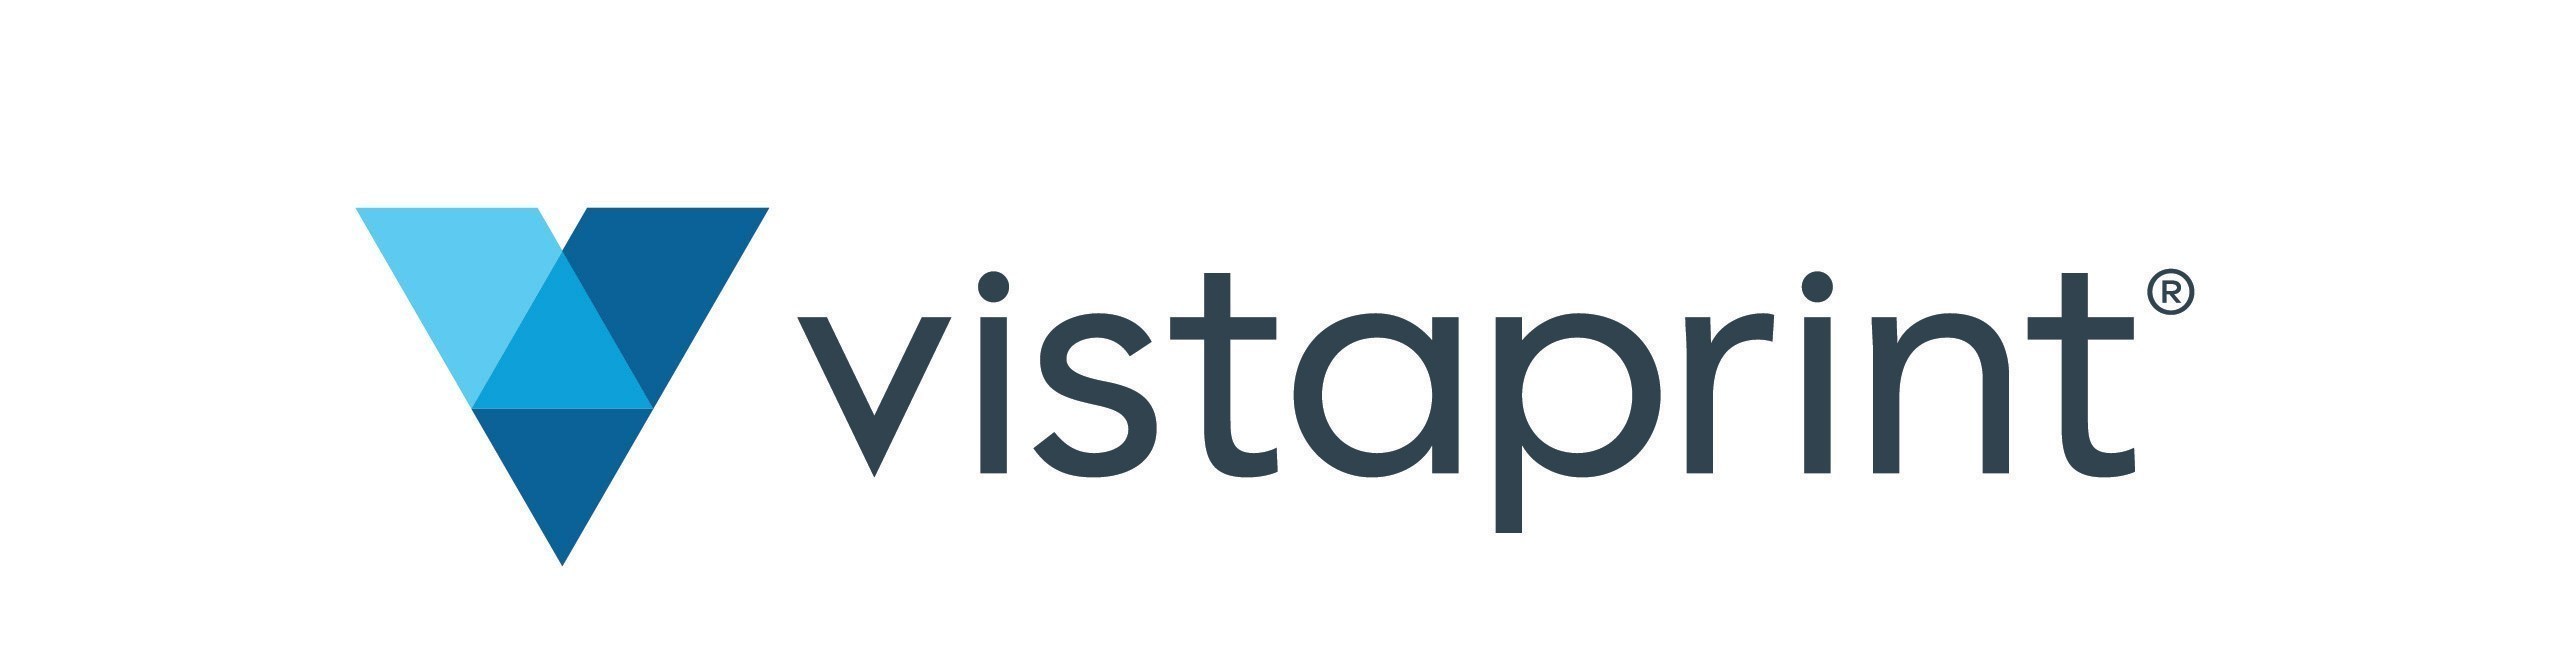 Business Logo Design Vistaprint